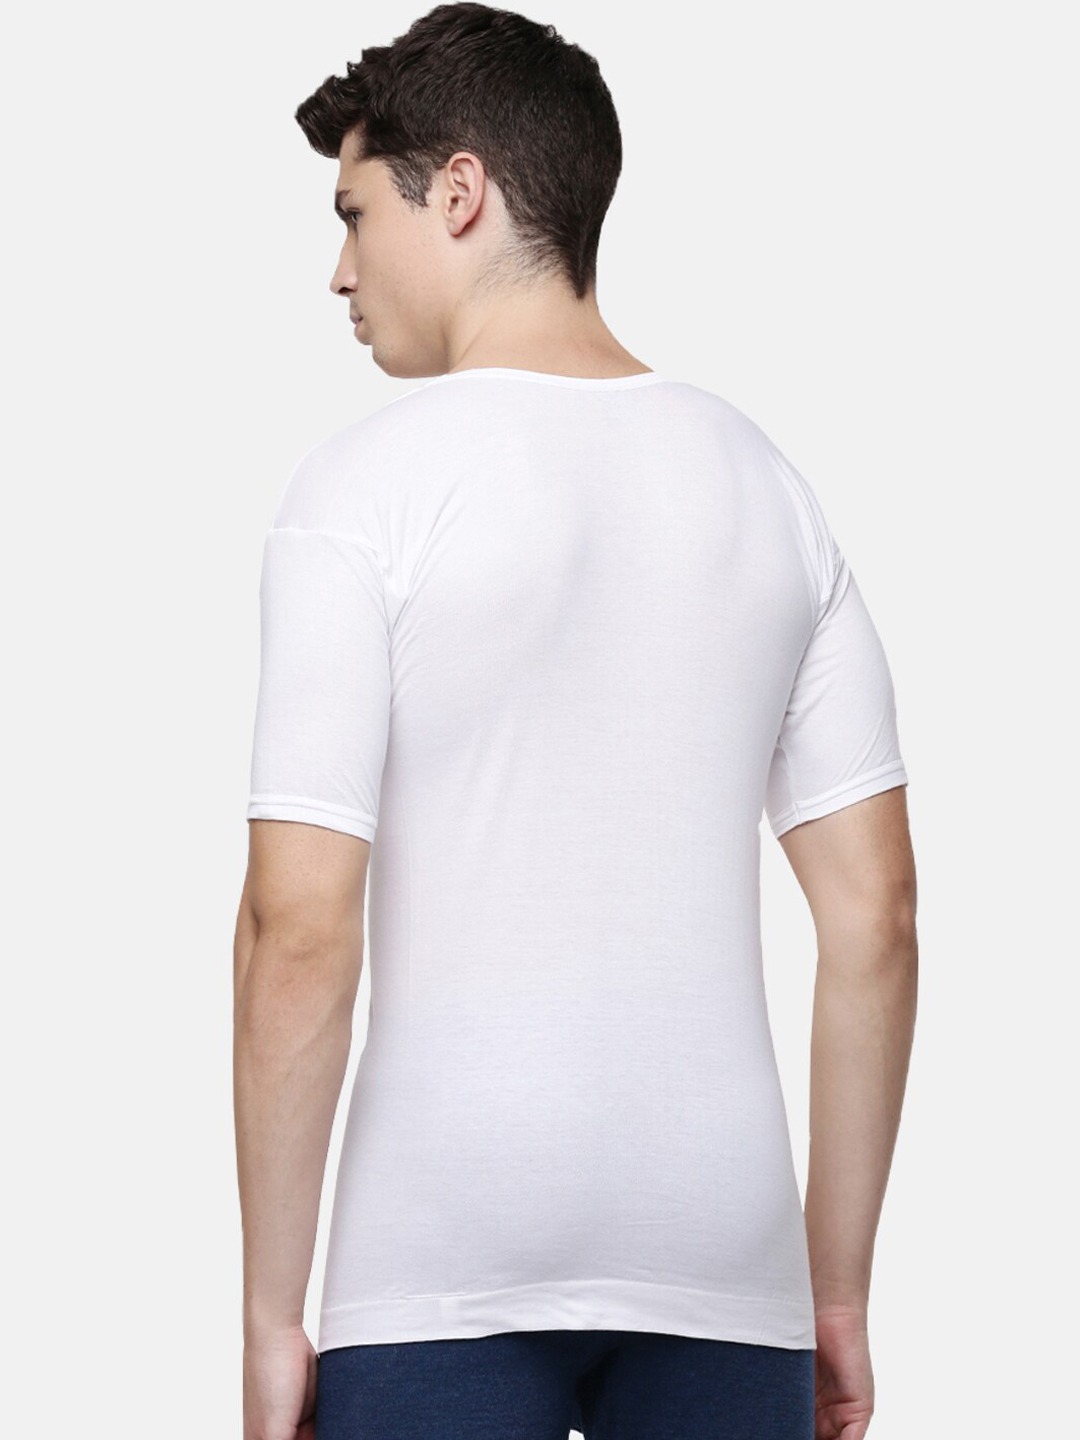 Clothing Innerwear Vests | Dollar Bigboss Men Pack of 7 White Solid Cotton Innerwear Vests - RH63083